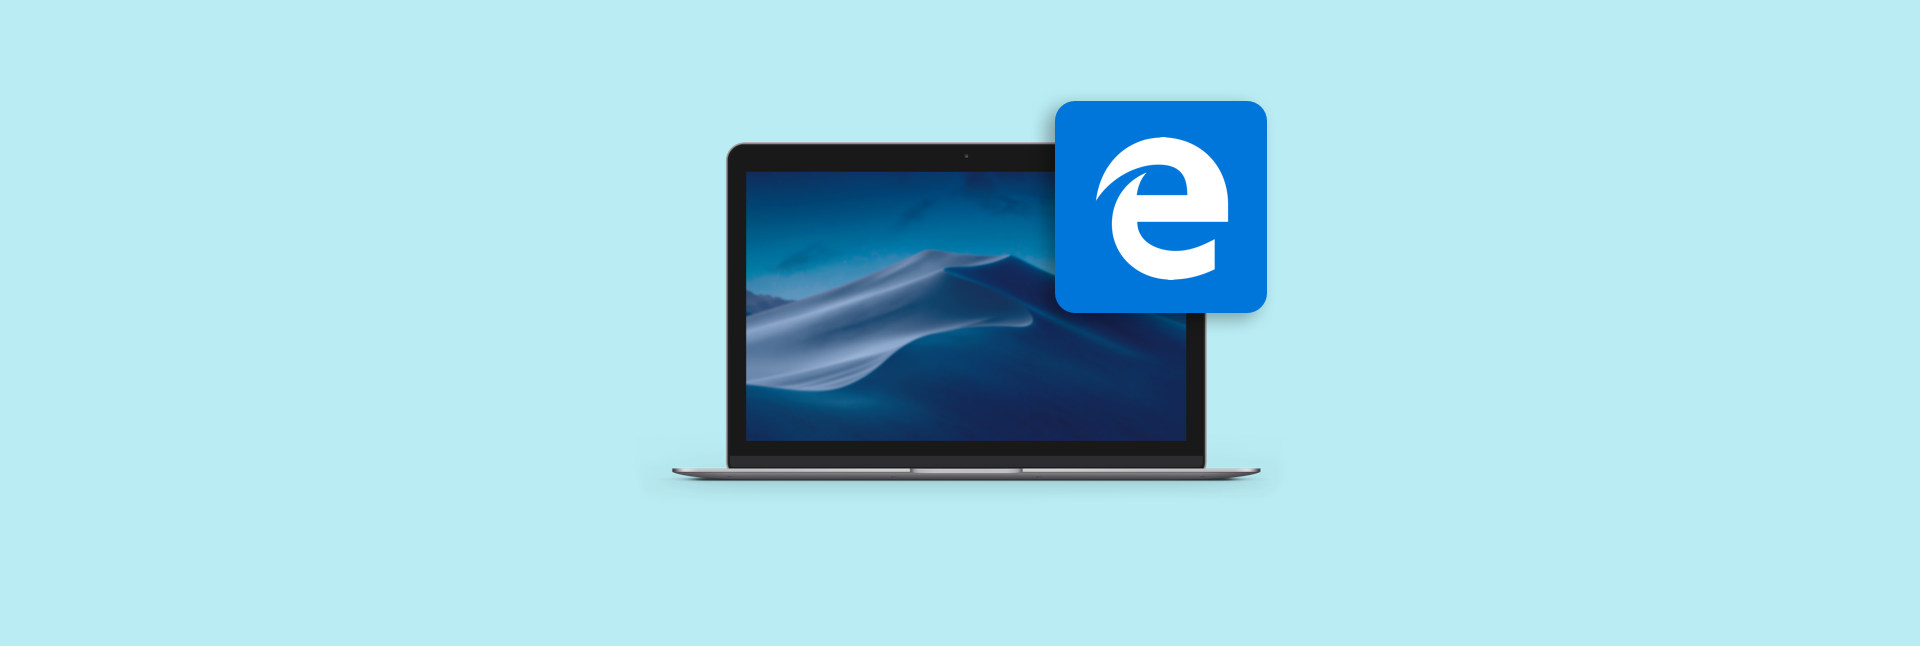 windows explorer download for mac